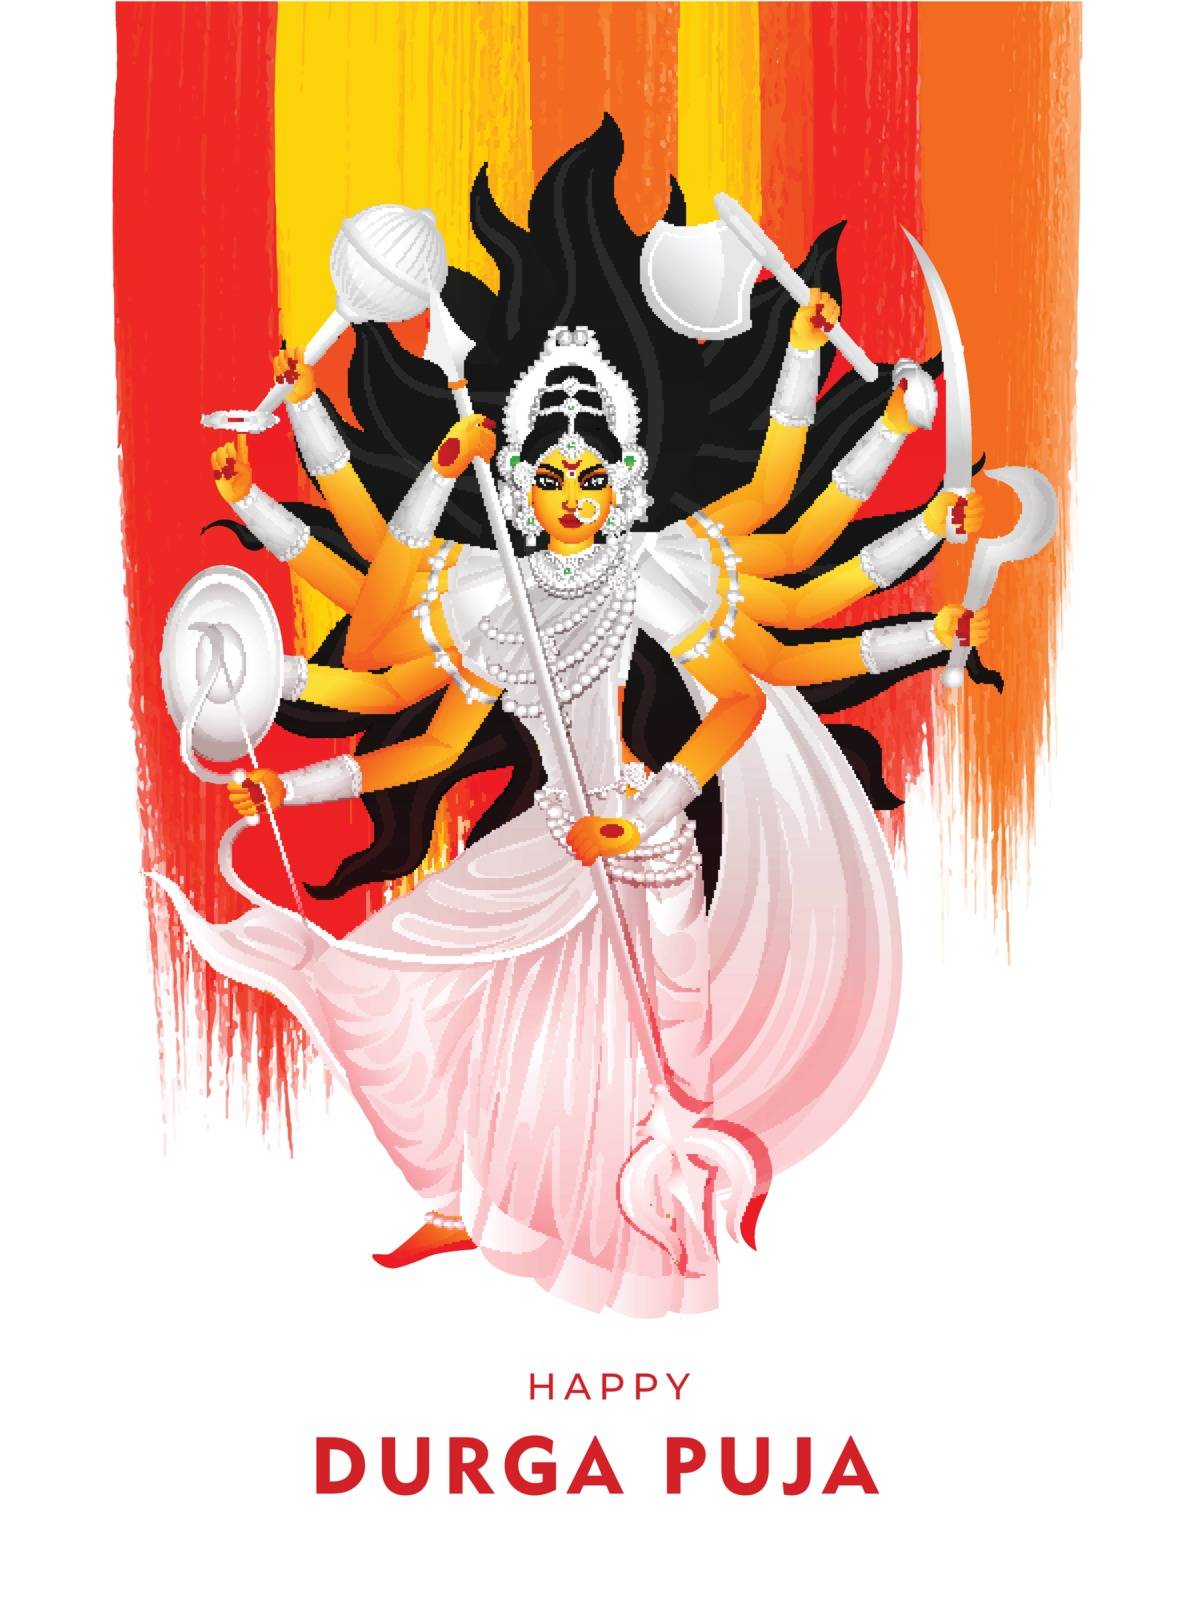 Illustration of Hindu Mythological Goddess Durga on brush stroke background for Happy Durga Puja celebration concept. Can be used as greeting card or template design.